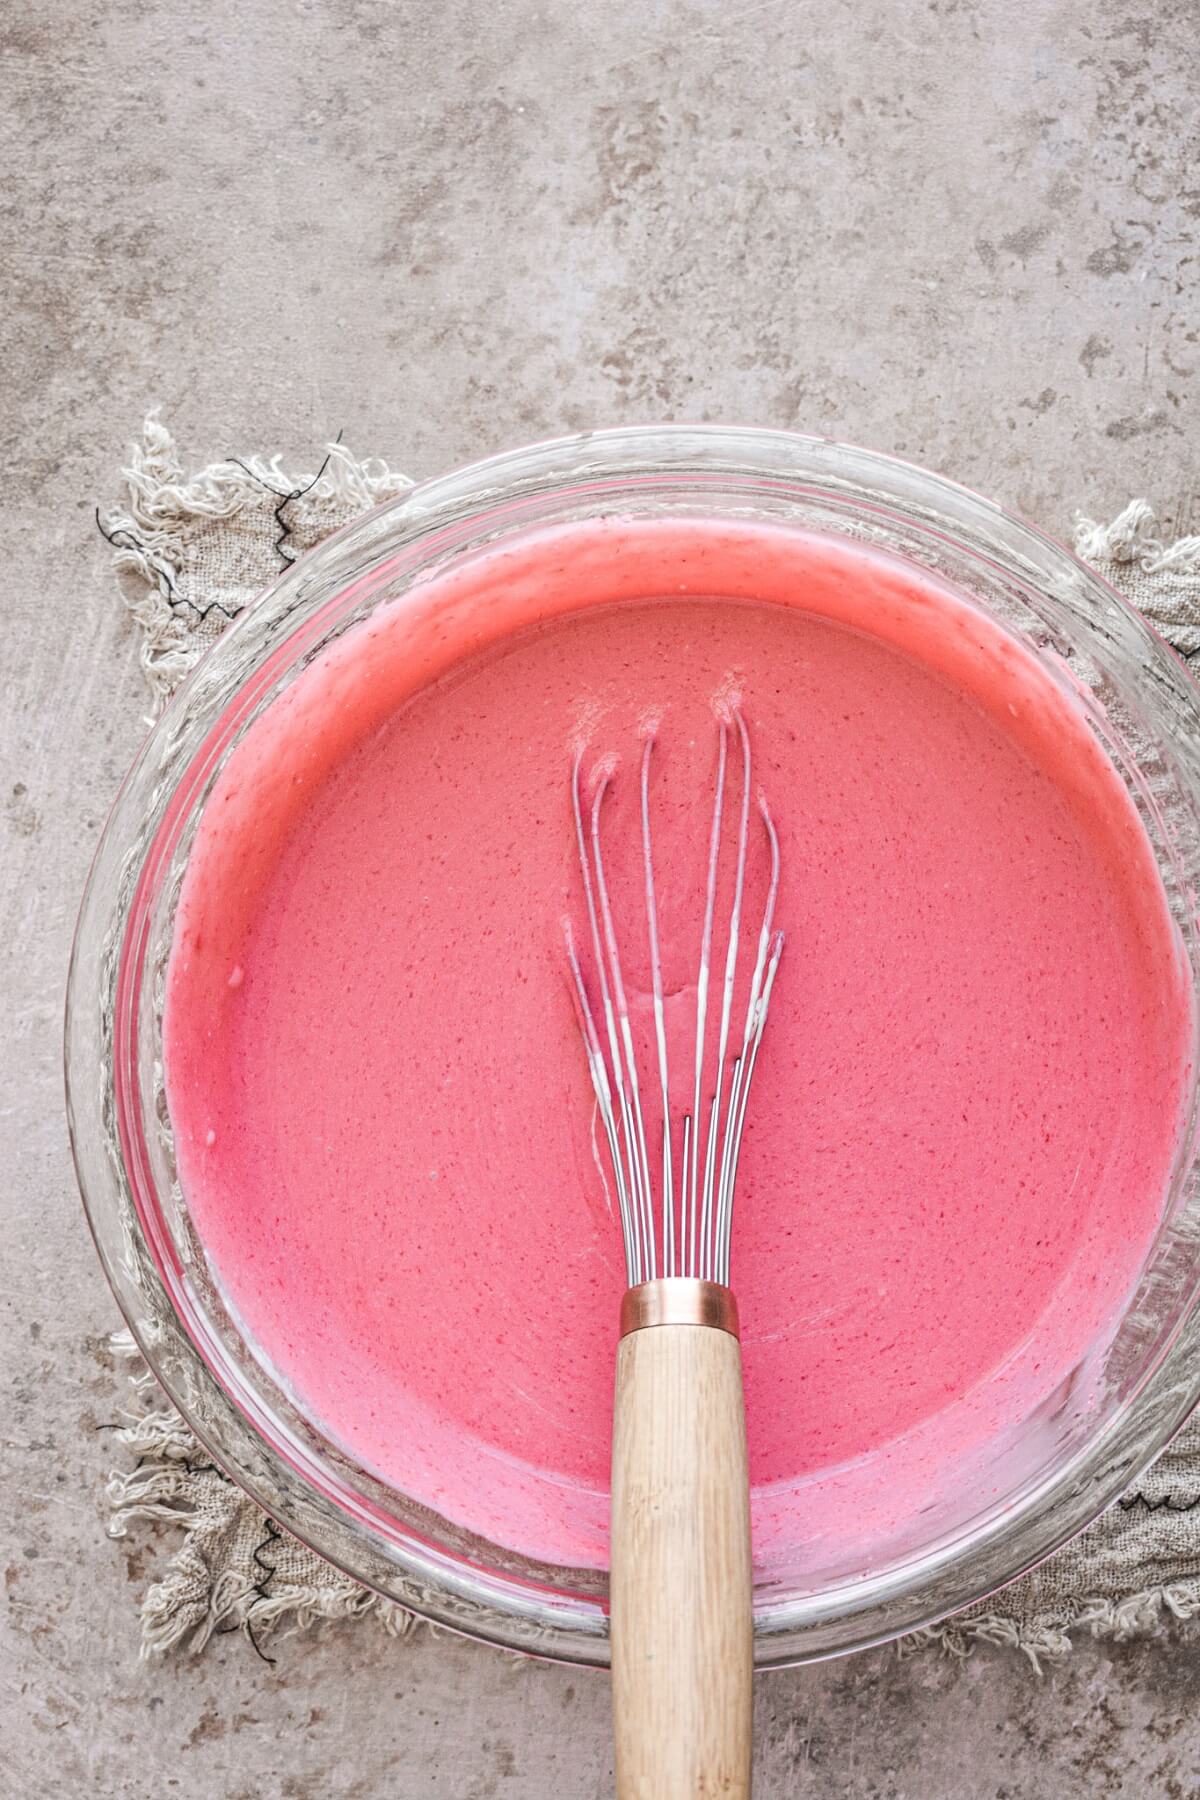 Steps for making raspberry ice cream.